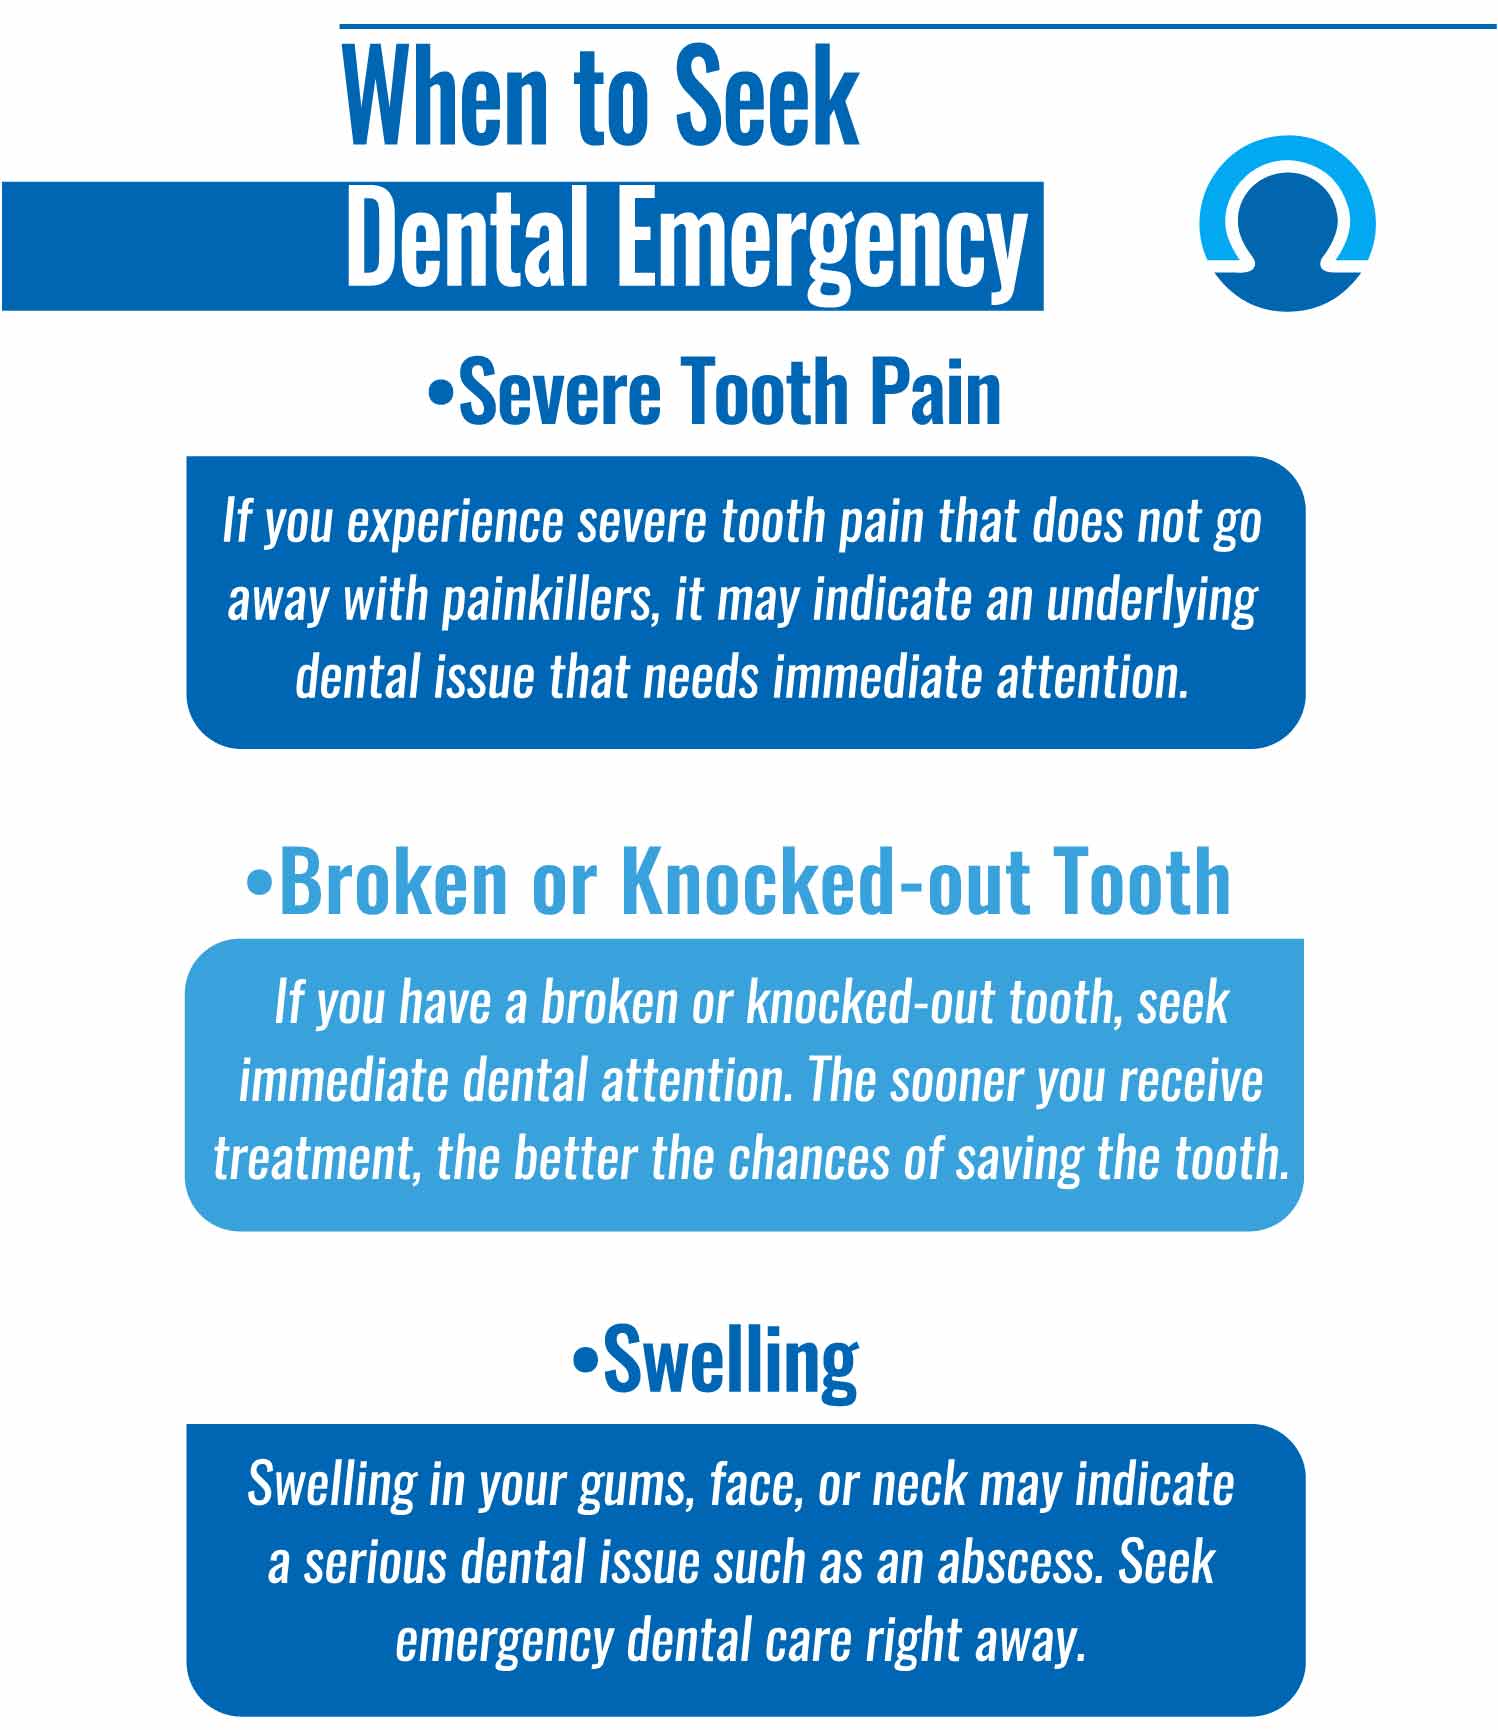 When to Seek Dental Emergency